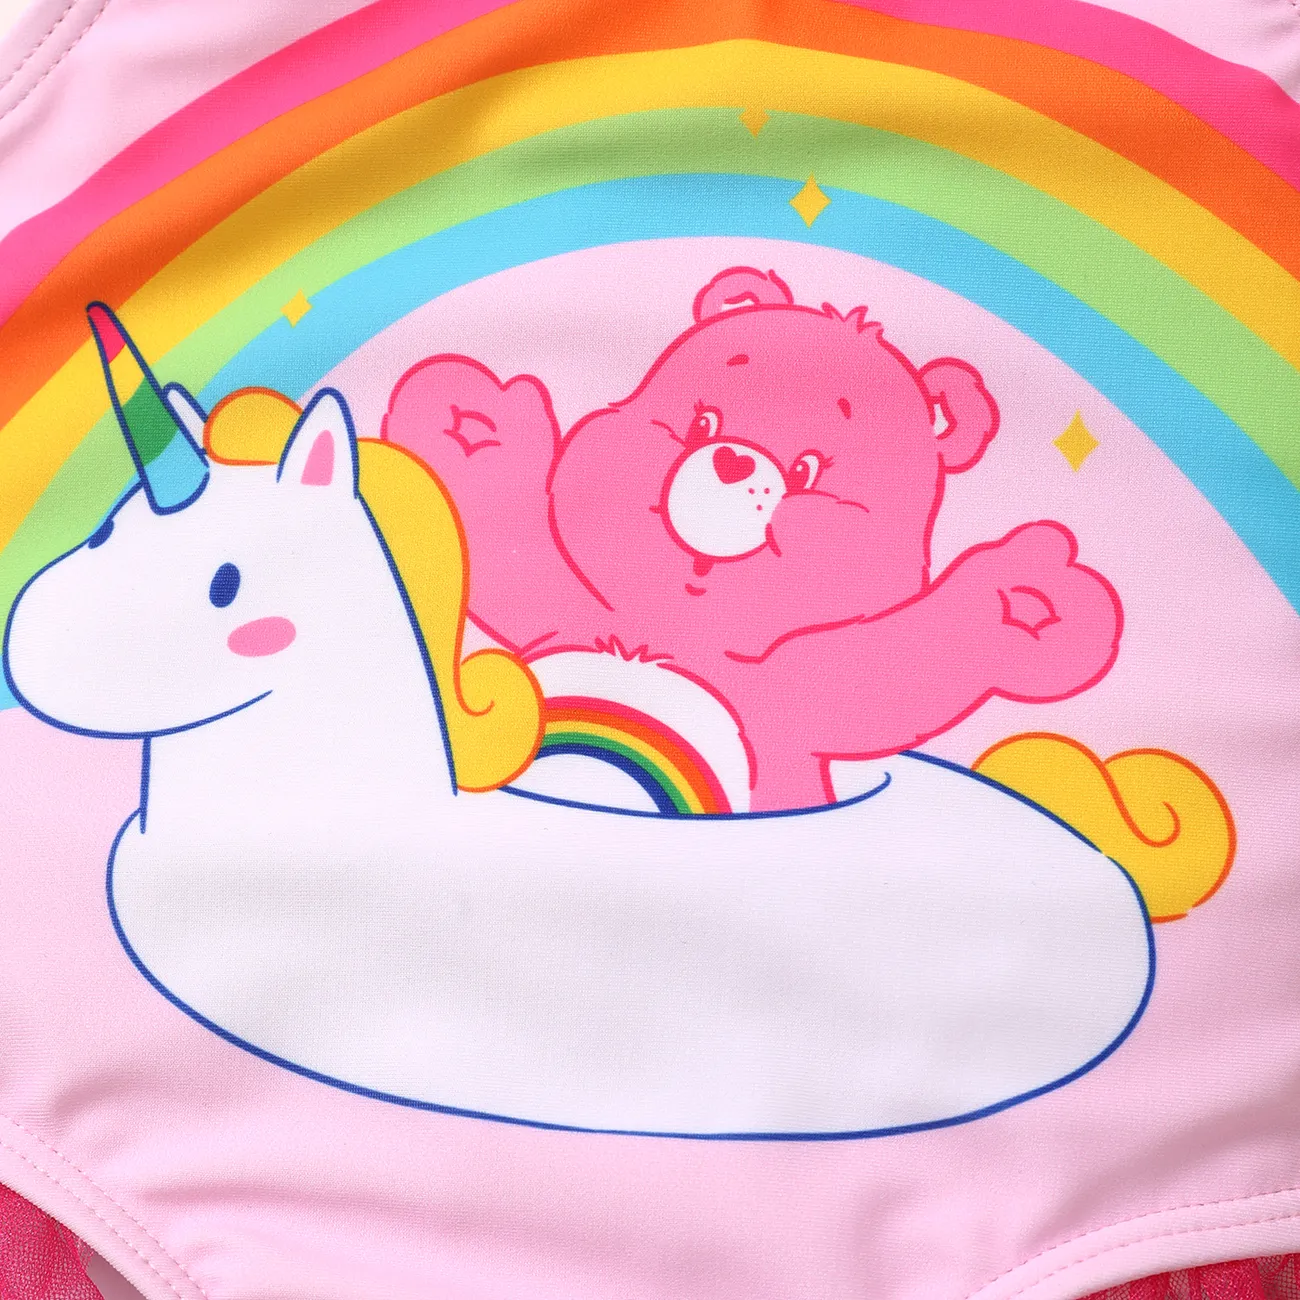 Care Bears Baby Girl 2pcs Bärendruck bunter Rüschenbesatz einteiliger Badeanzug & Mützen-Set Hell rosa big image 1